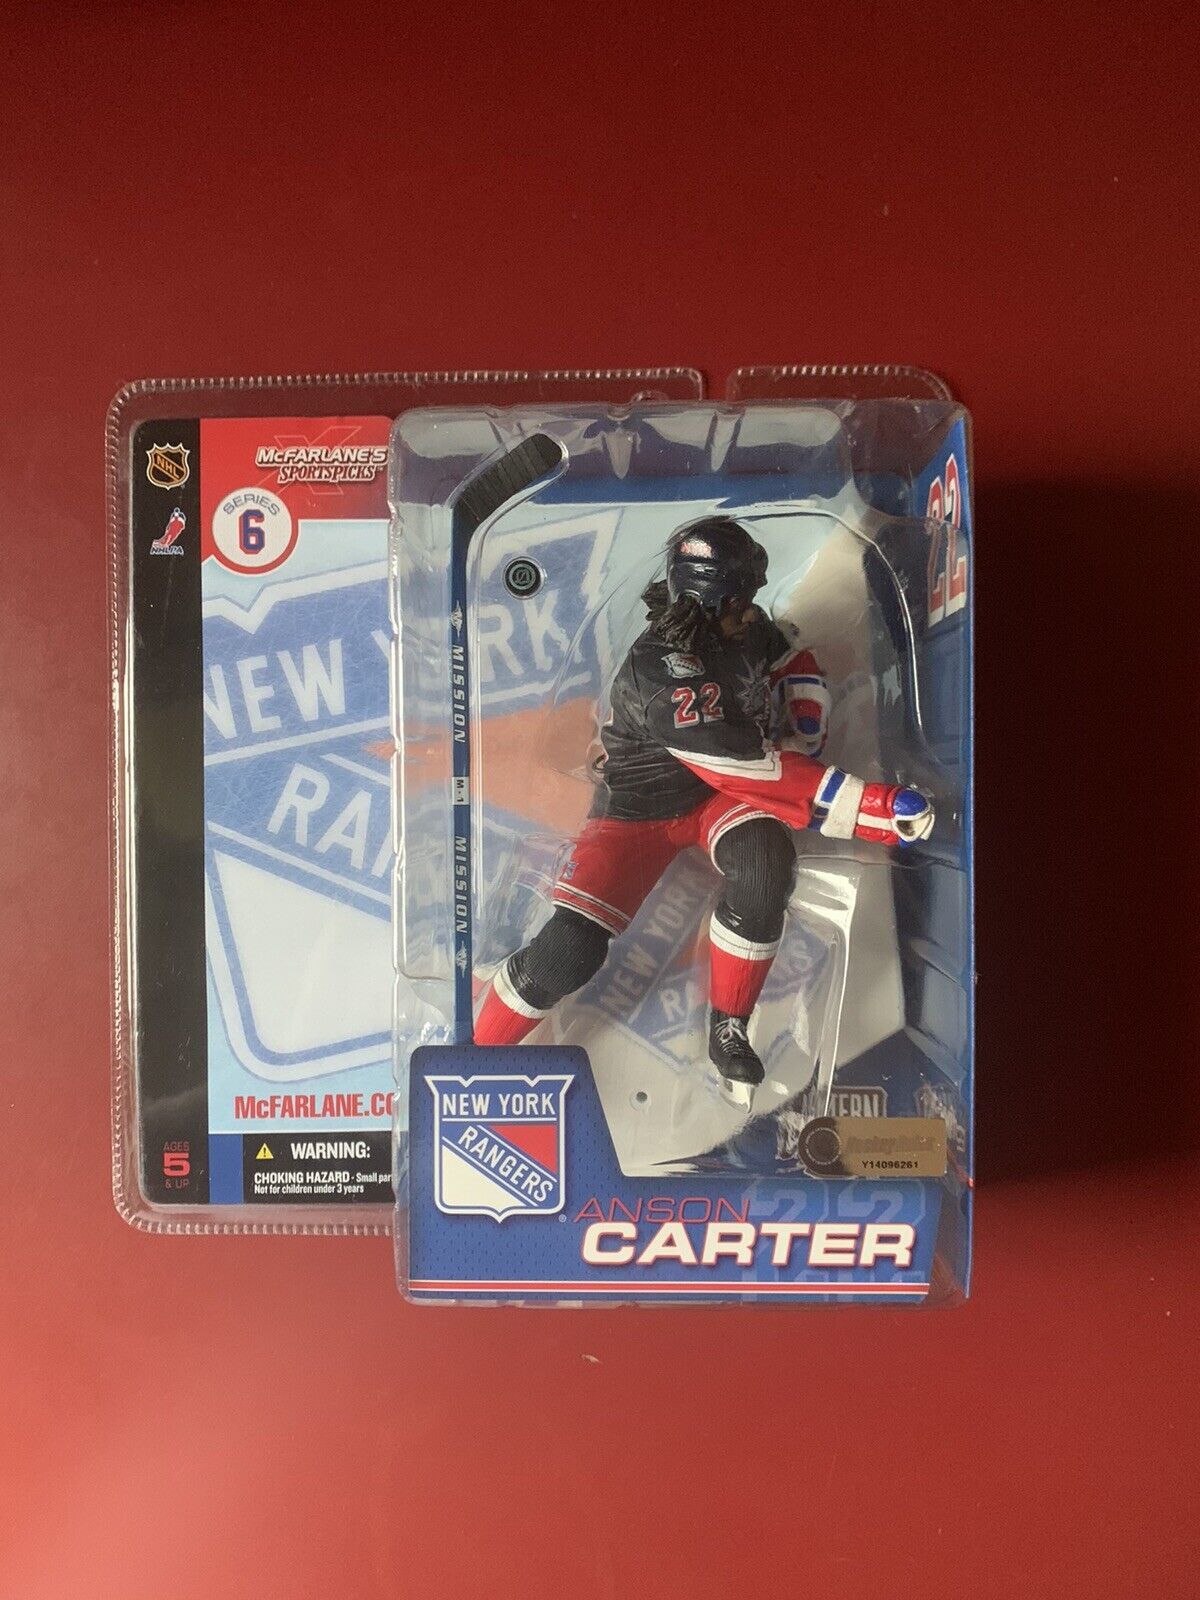 McFarlane’s Sport Picks NHL 6 NY RANGERS - ANSON CARTER (McFarlane Toys, 2003)